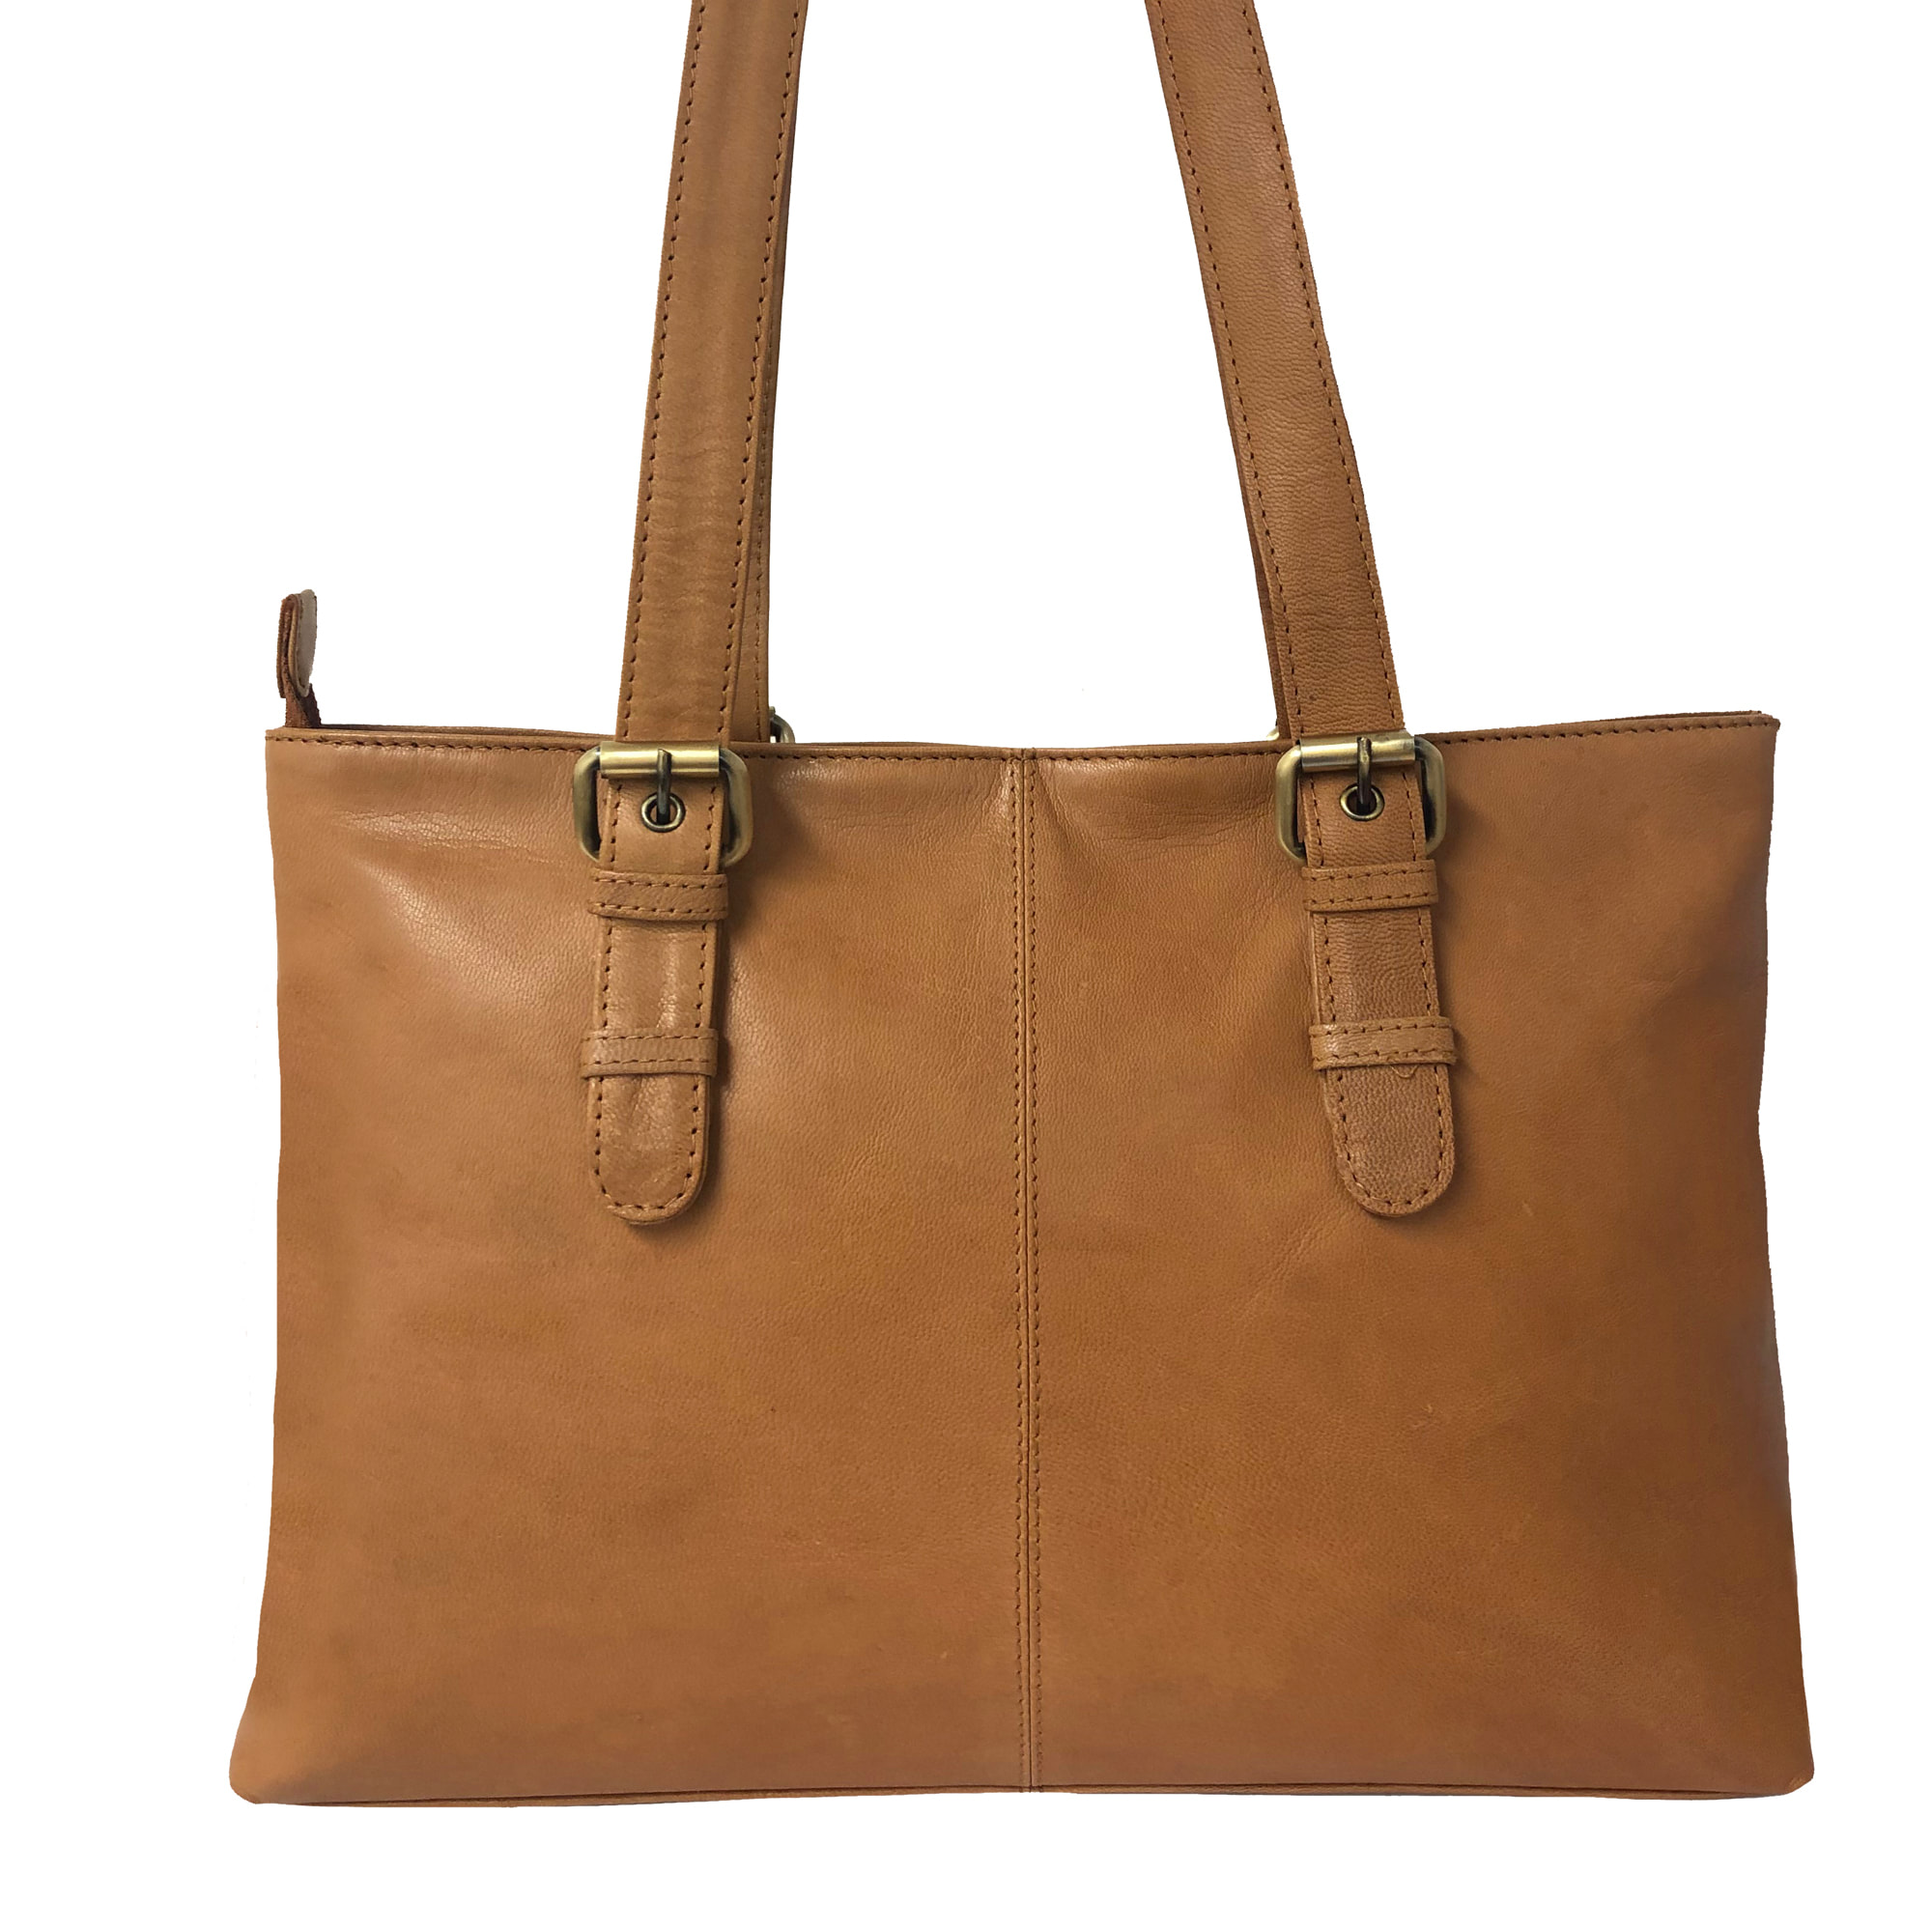 Rowallan Tan Leather Shoulder Bag, Work Bag - SALE